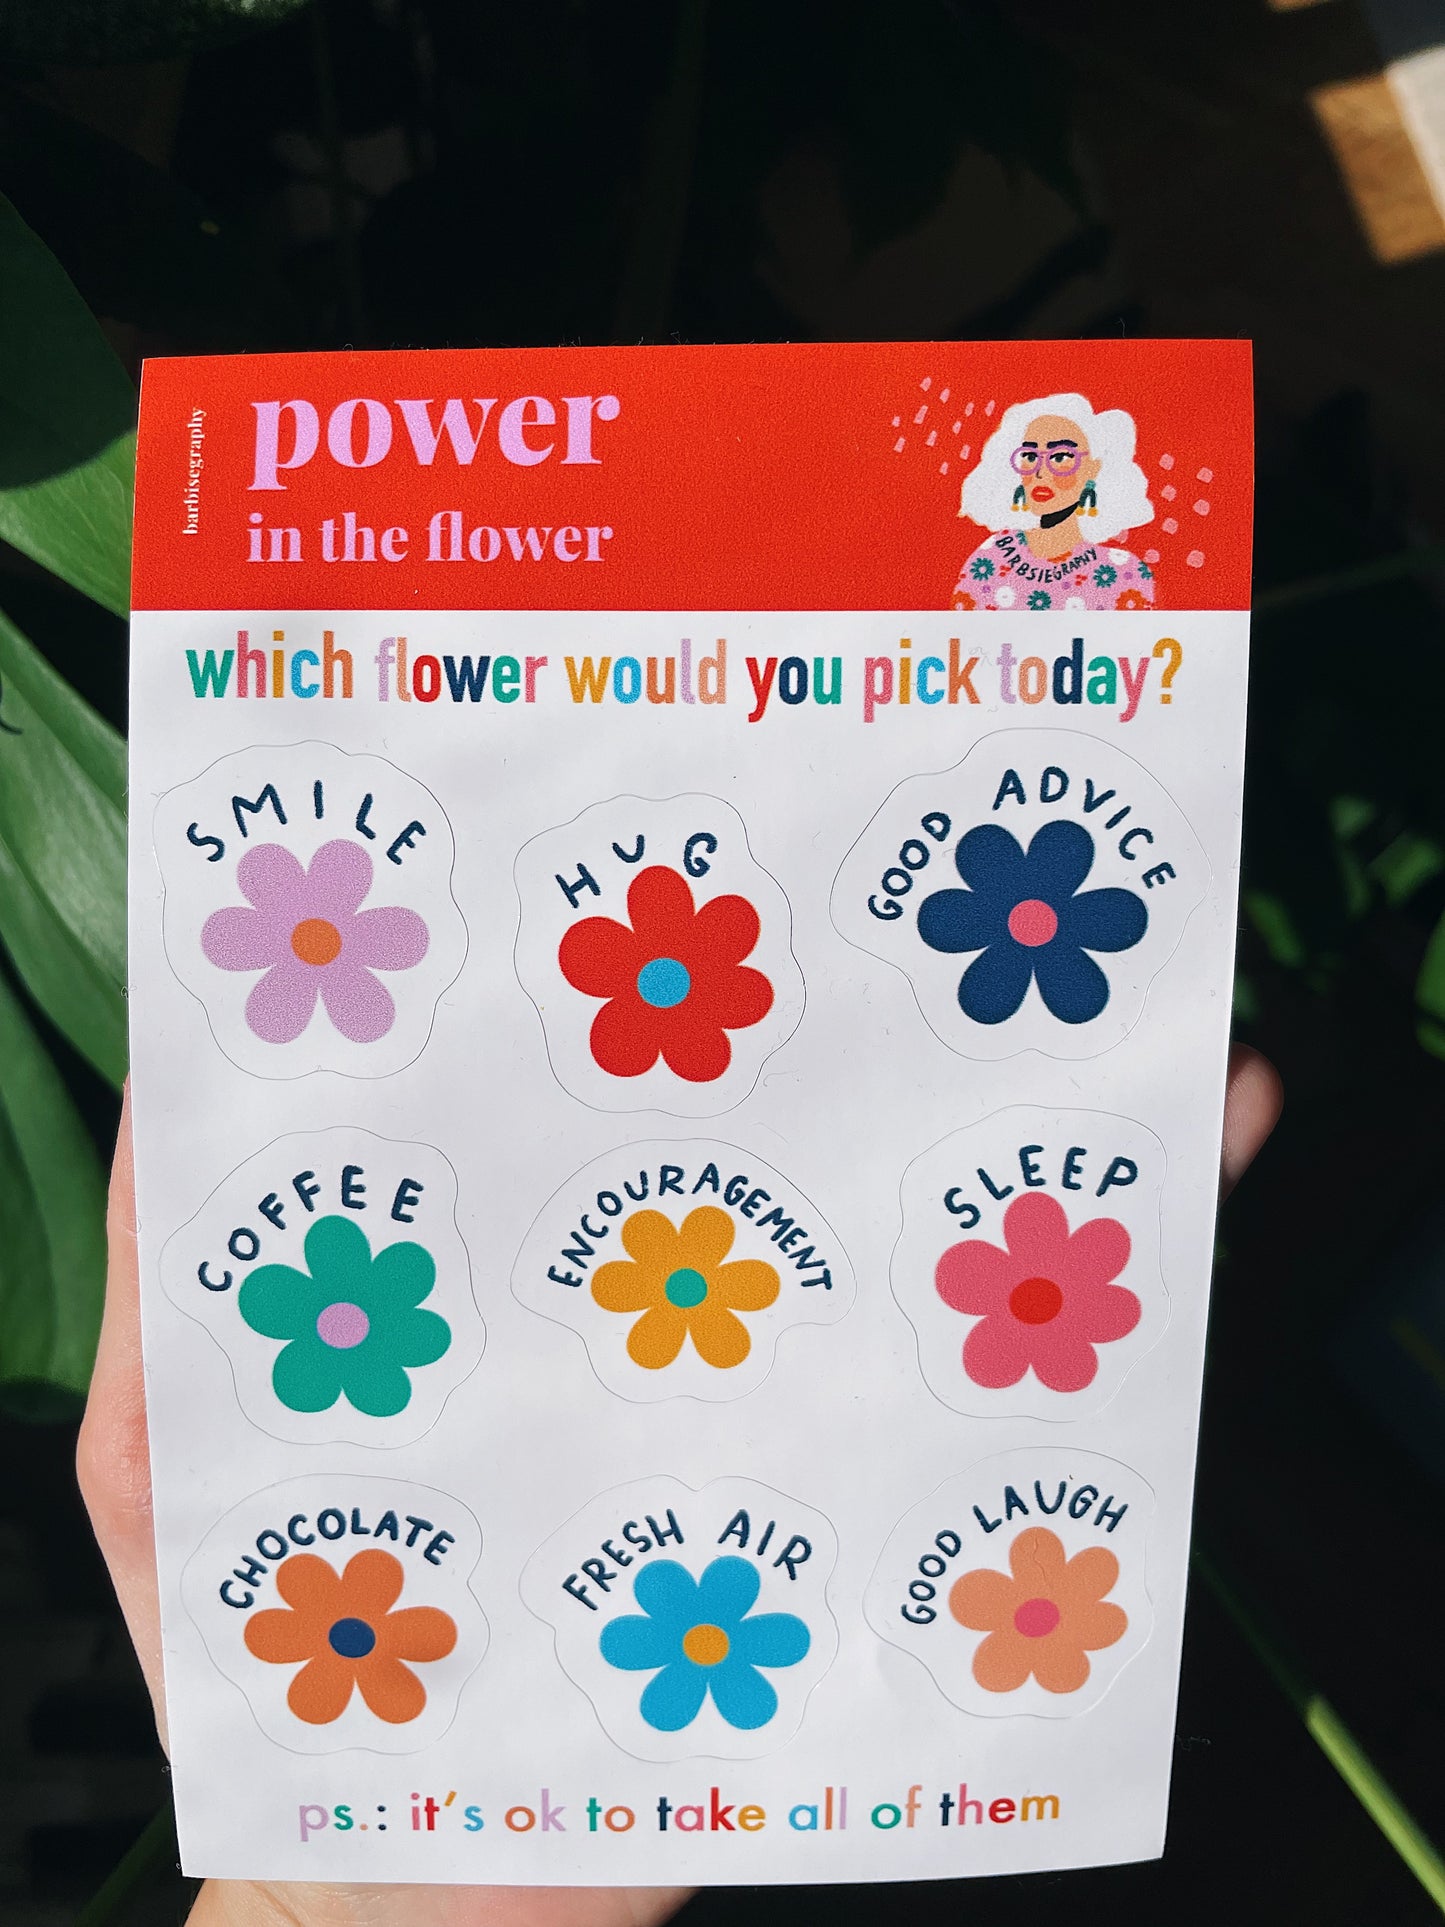 Power in the Flower sticker pack